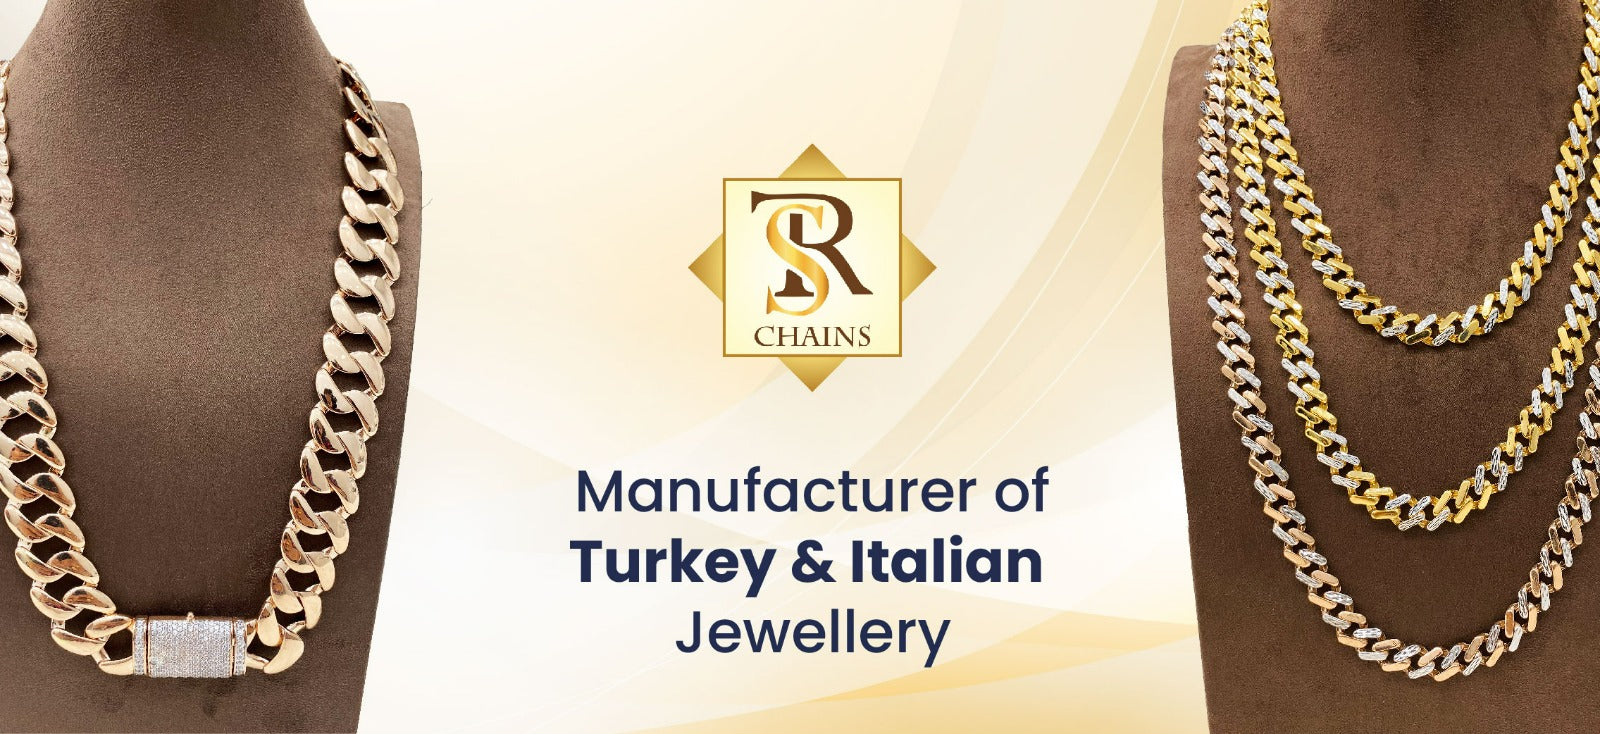 SRT Chain Italain Turkey jewelelry manufacturer and wholesaler Mumbai India